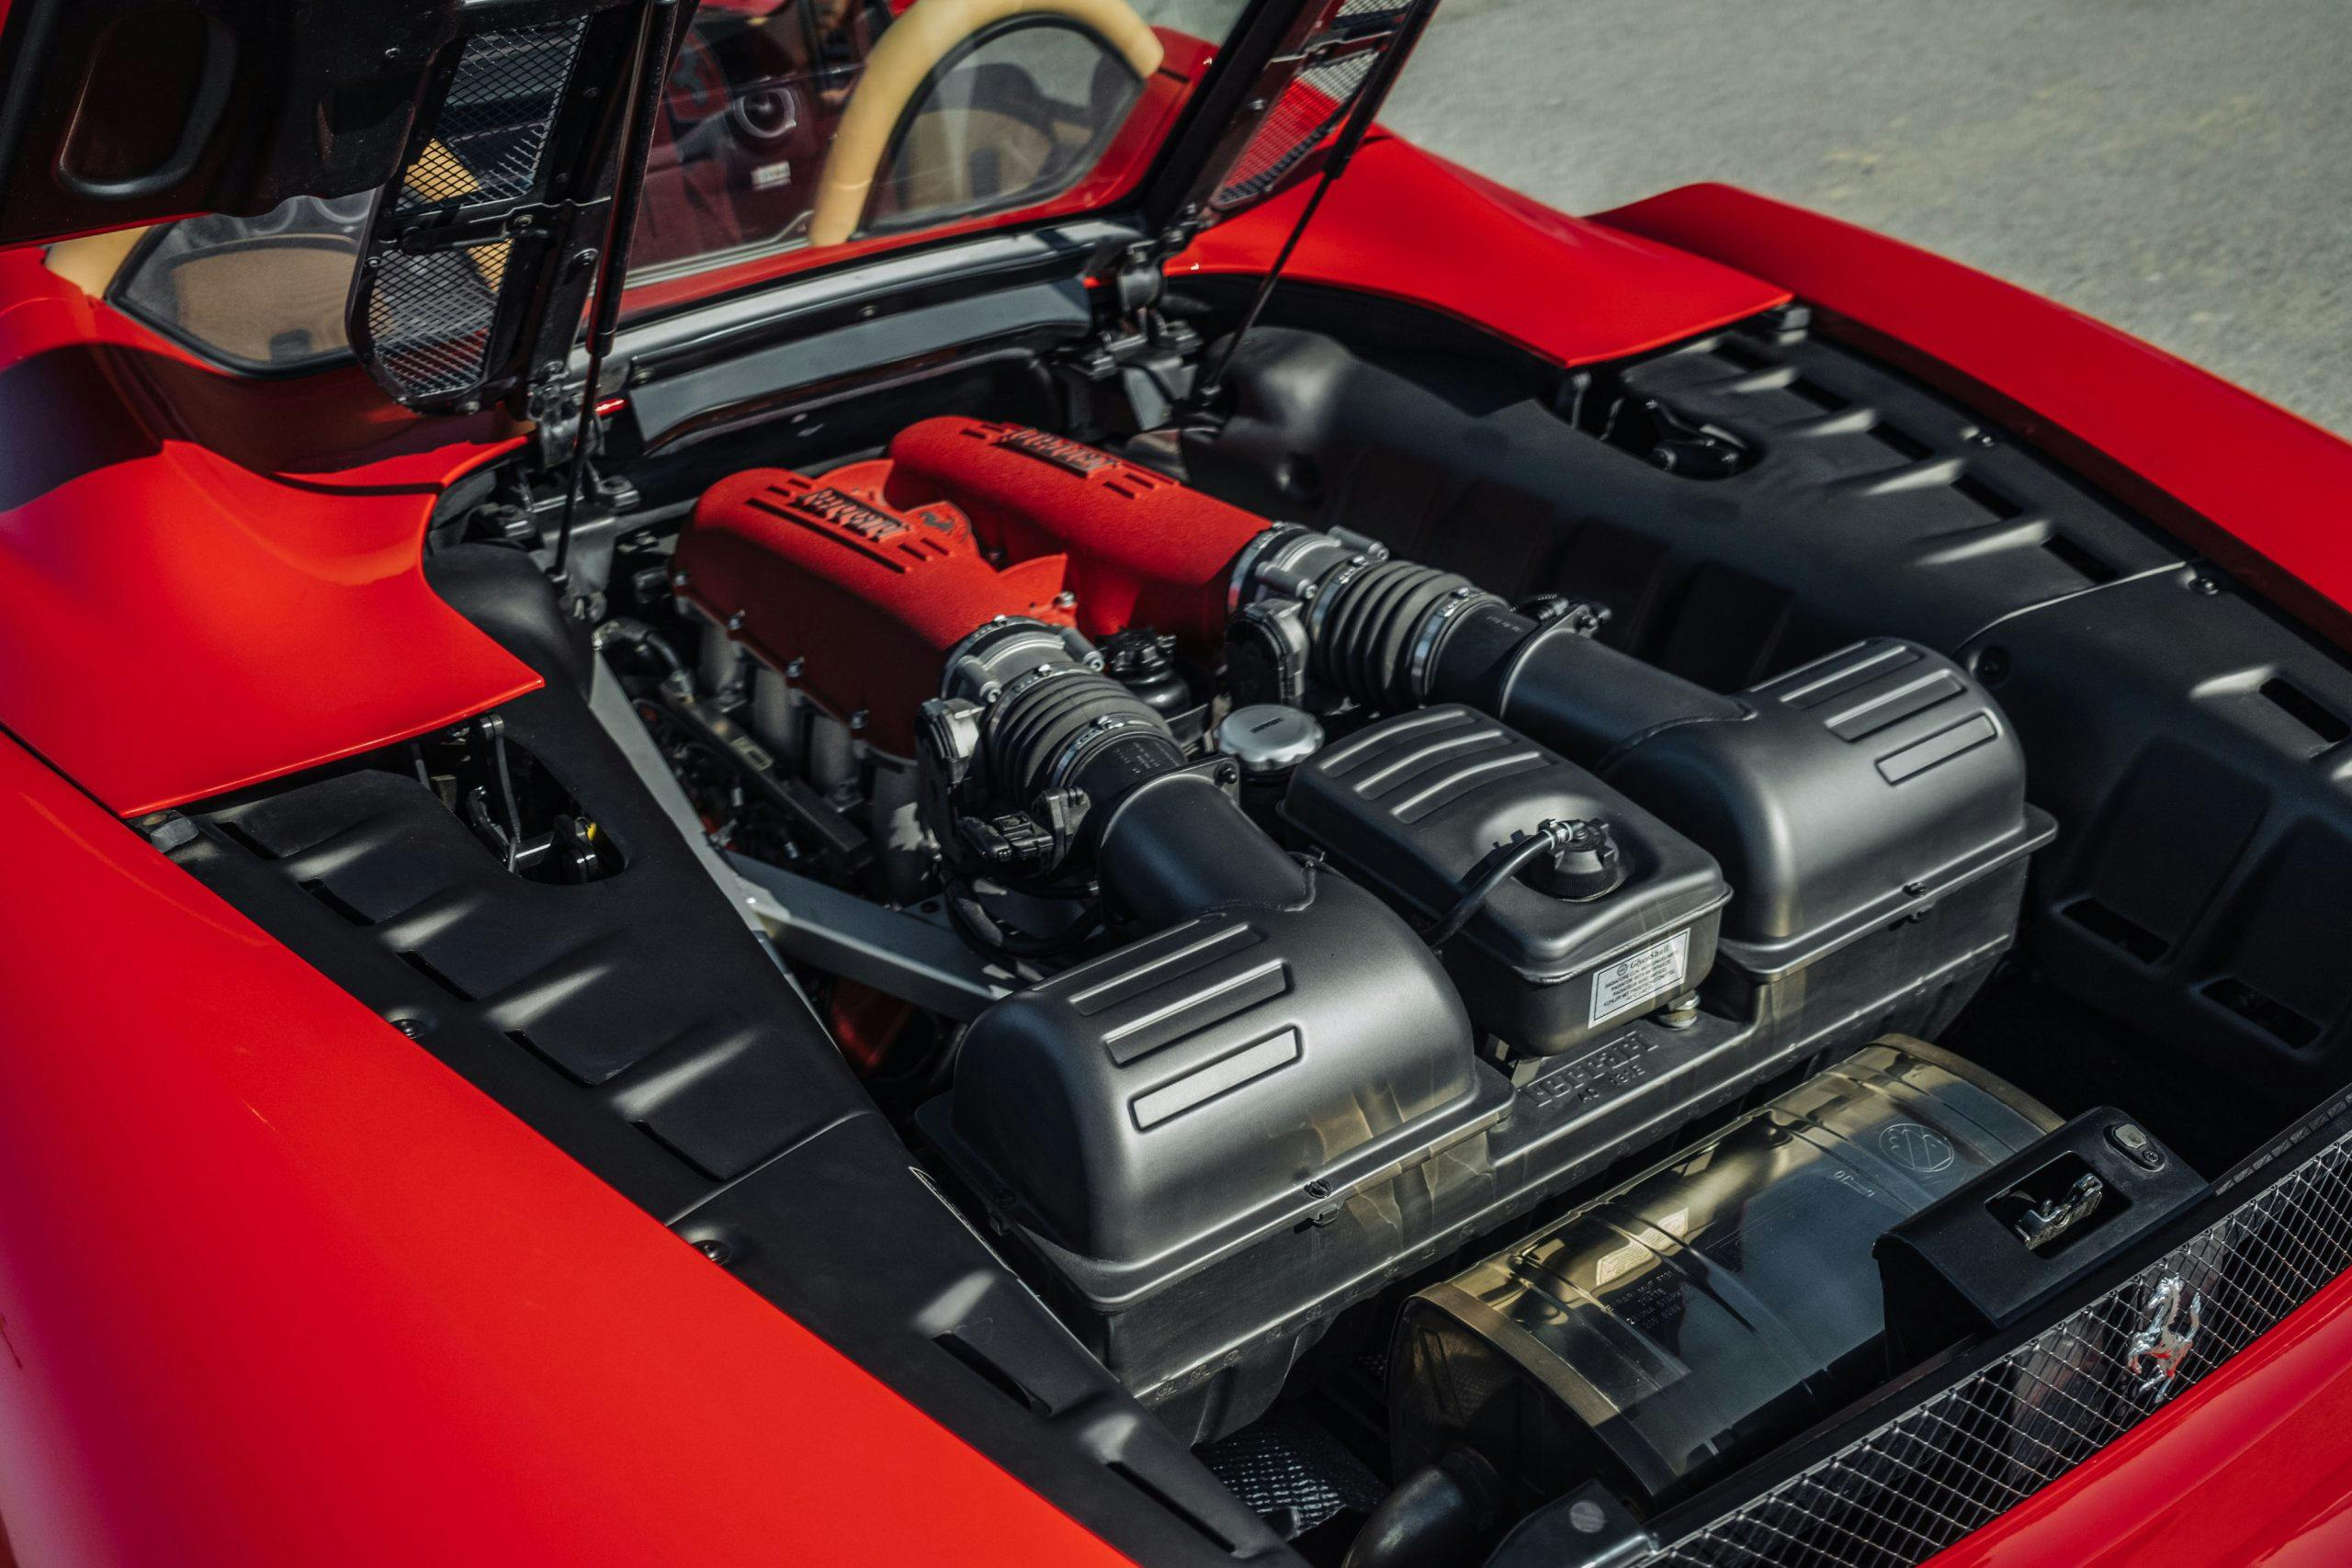 2007 Ferrari F430 Spider engine bay